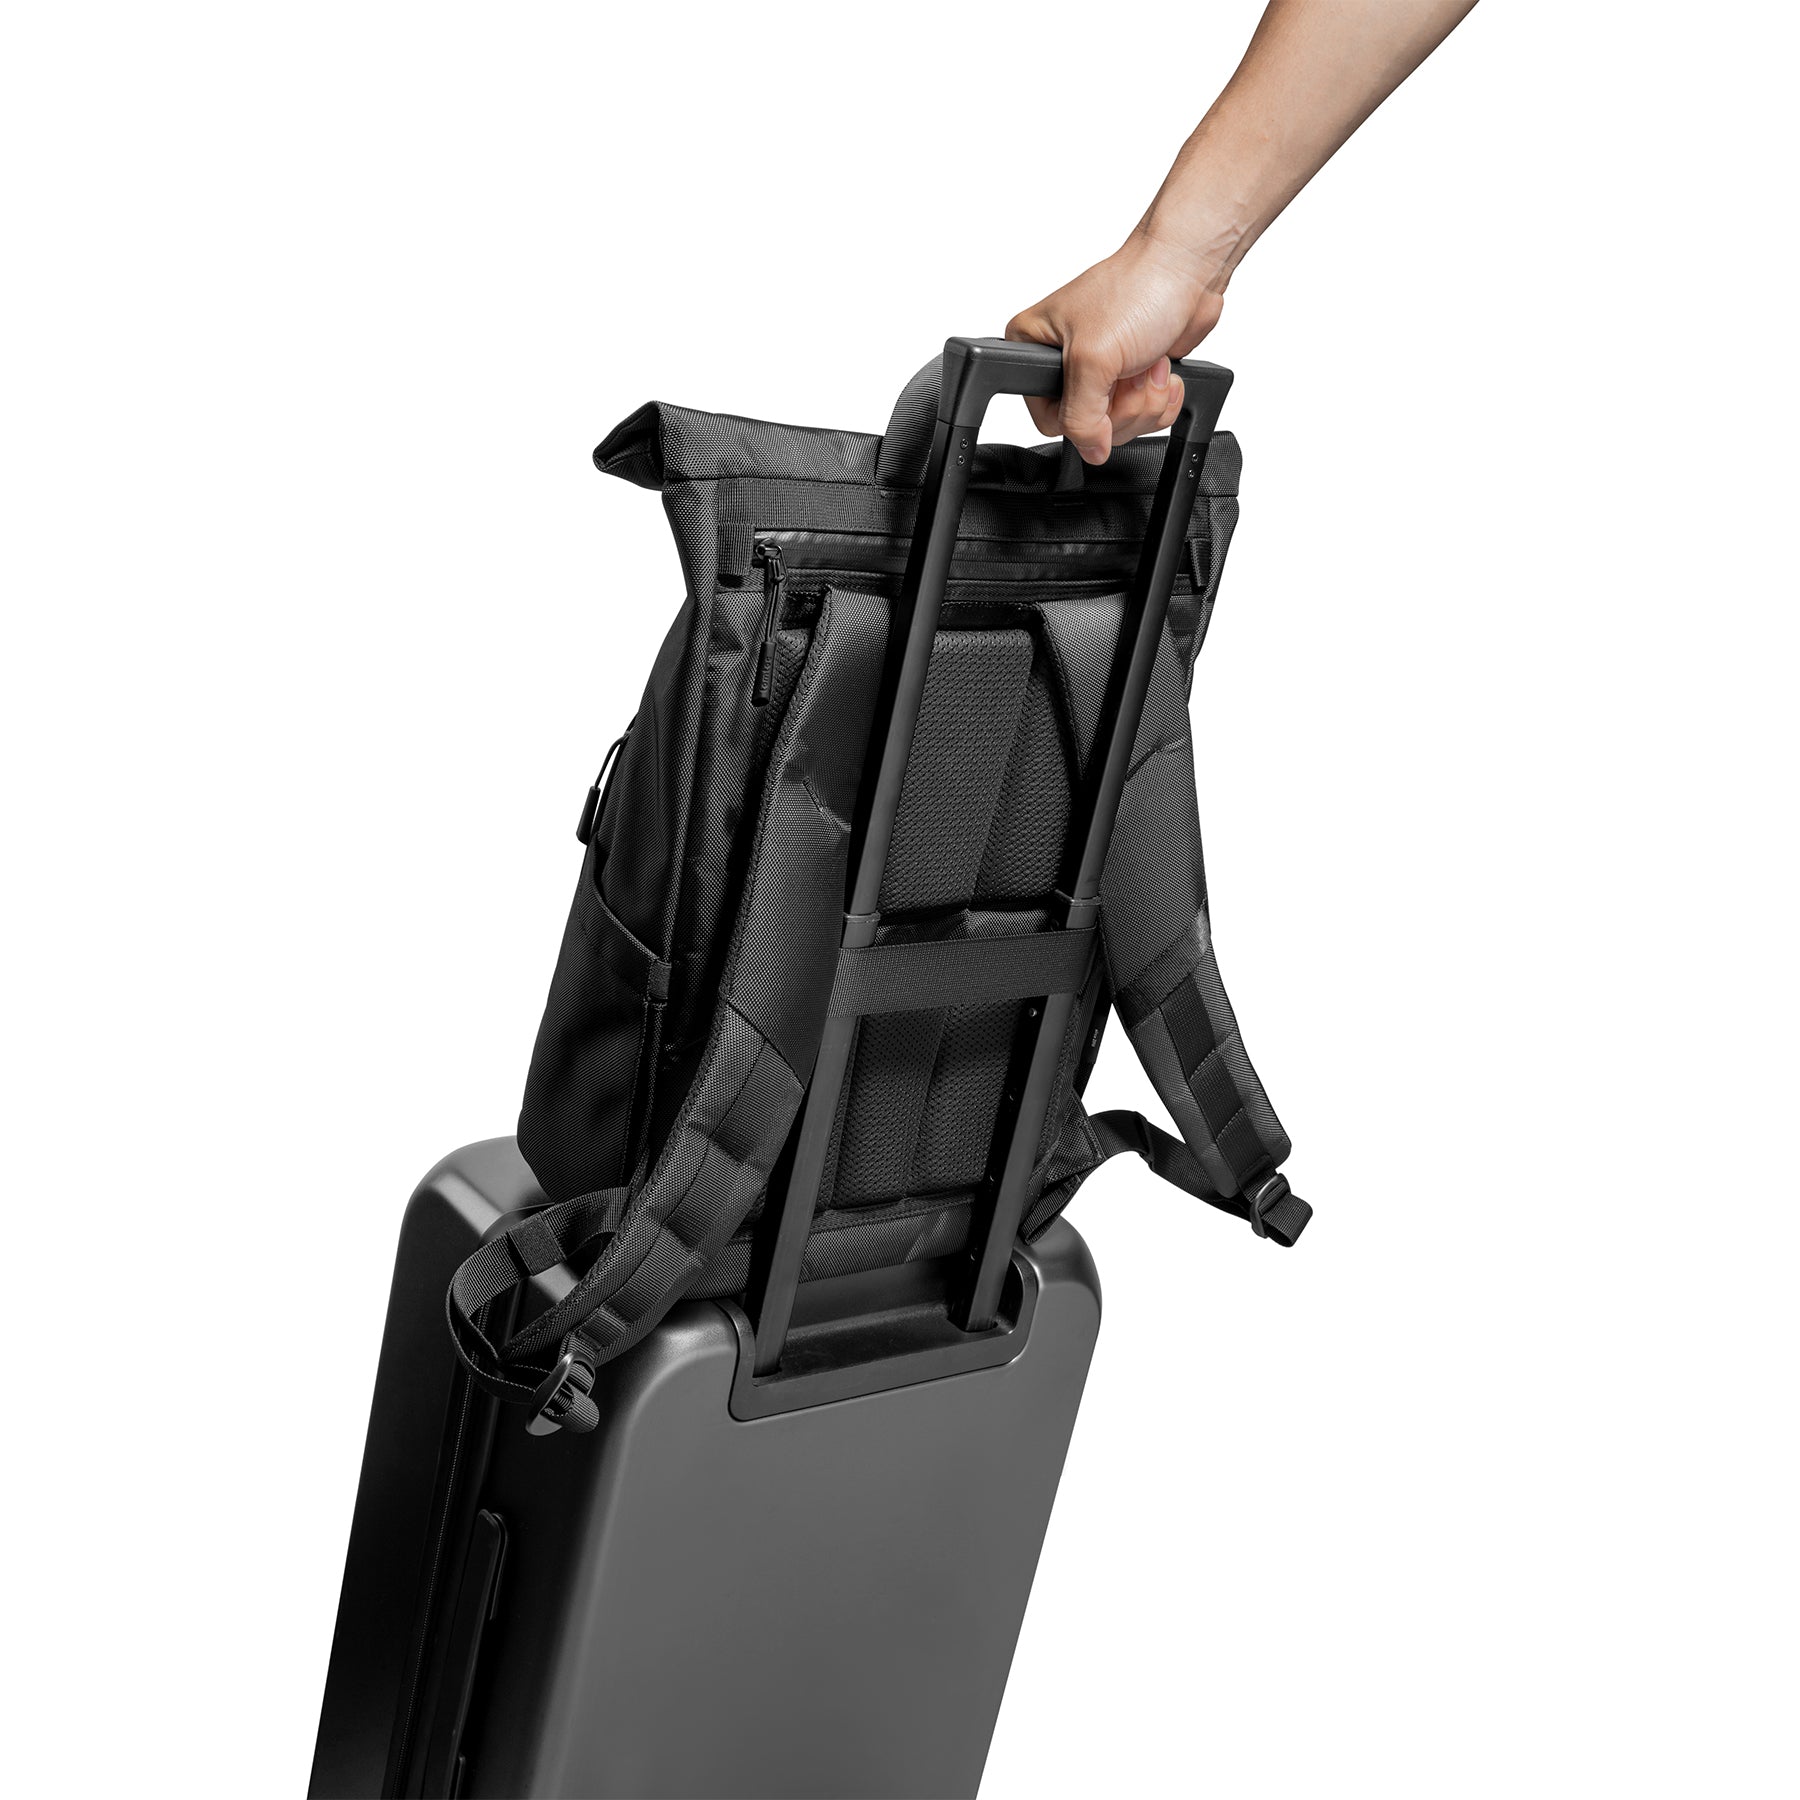 tomtoc 15.6 Inch Rolltop Adjustable Capacity Laptop Backpack - Black